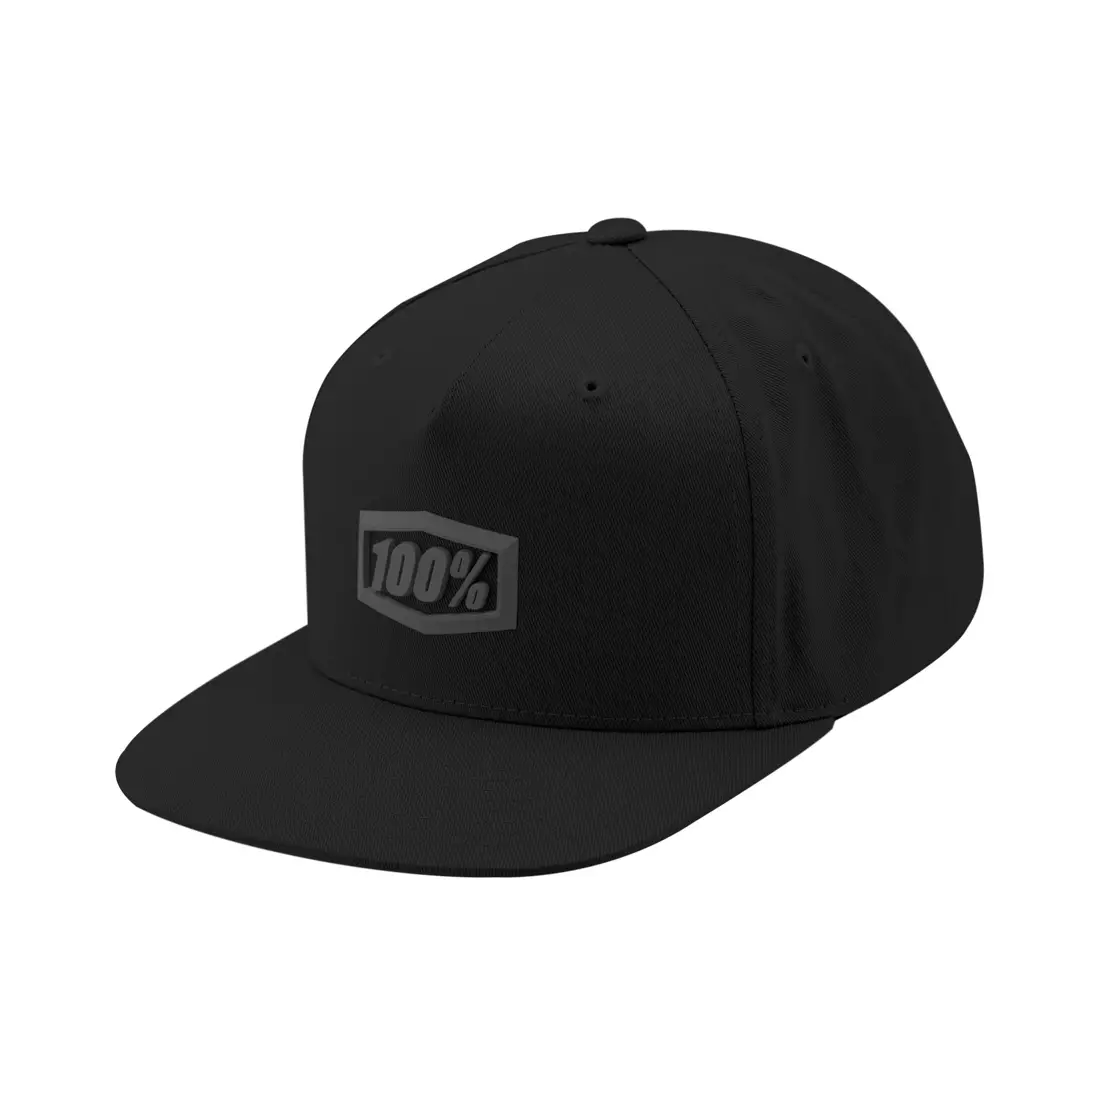 100% czapka z daszkiem ENTERPRISE Snapback Hat Black/Charcoal Speck 